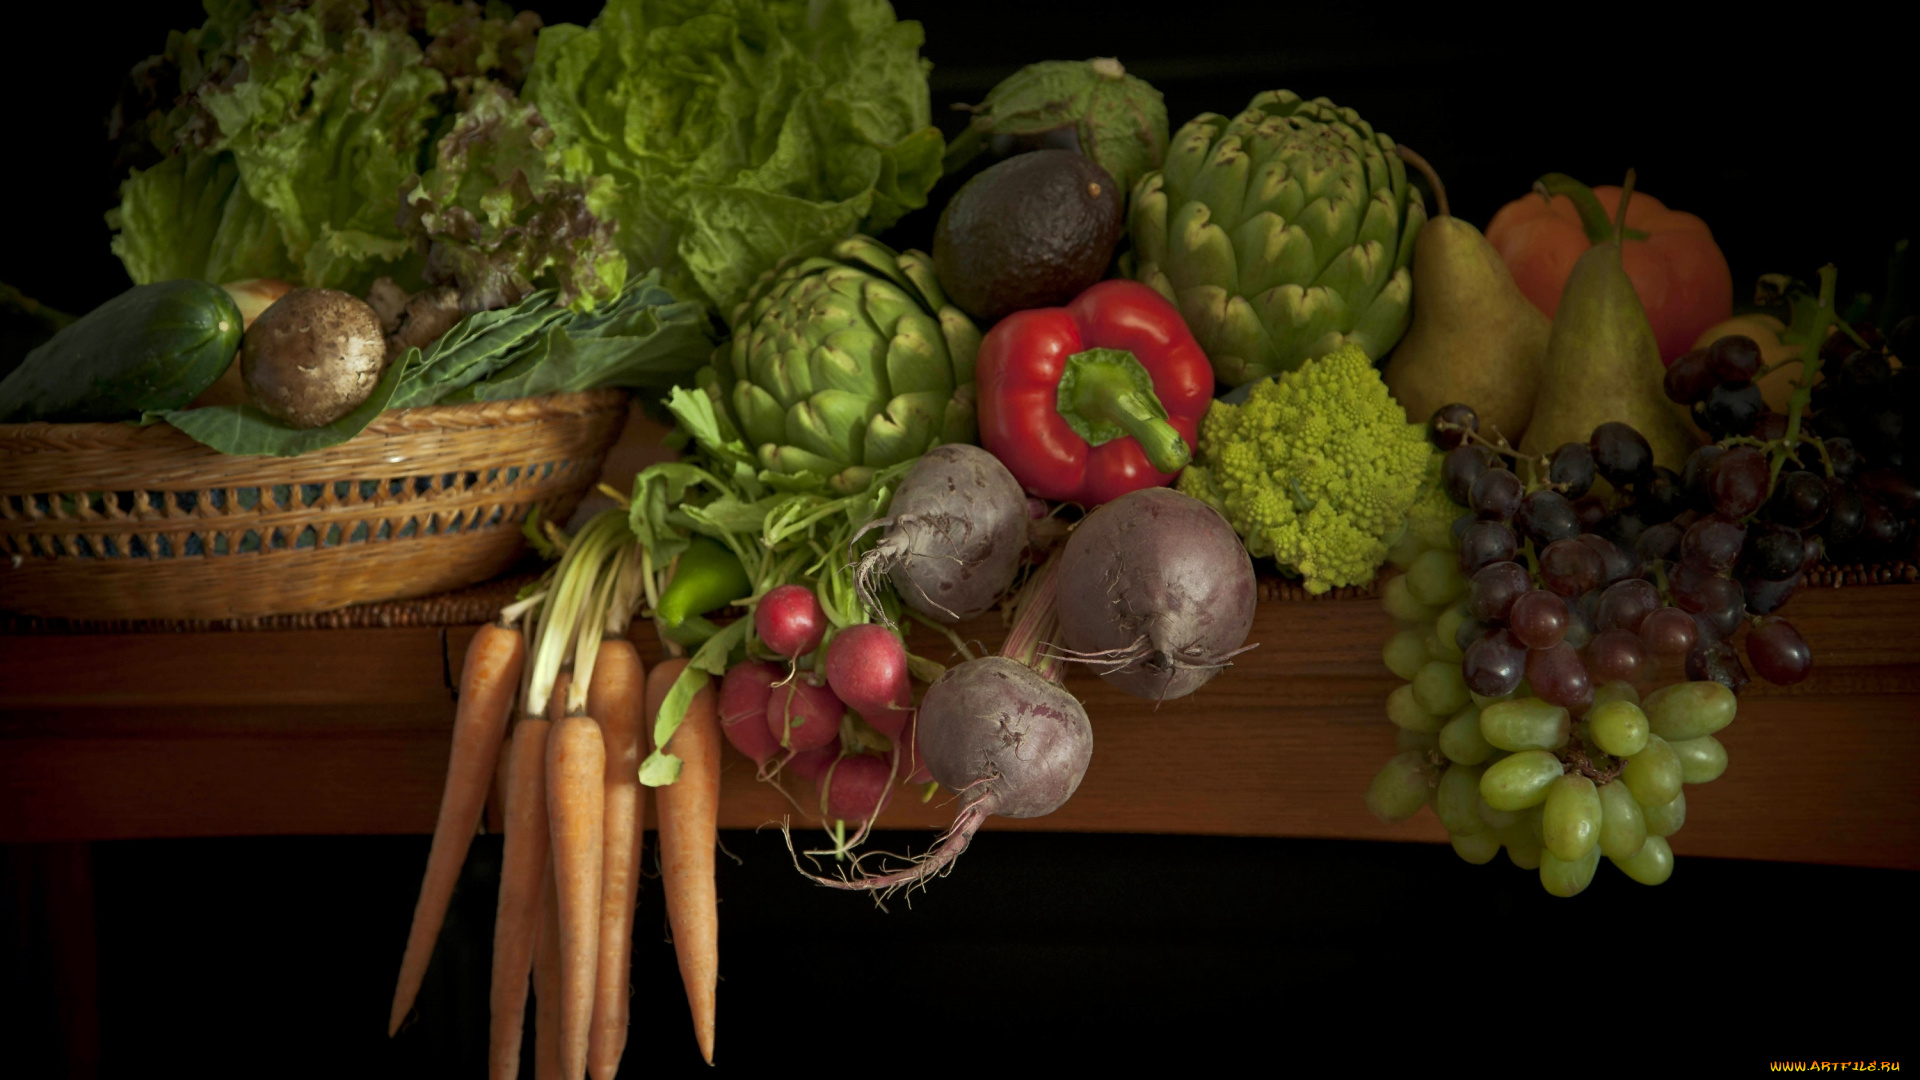 еда, фрукты, овощи, вместе, виноград, груши, свекла, артишоки, перец, морковь